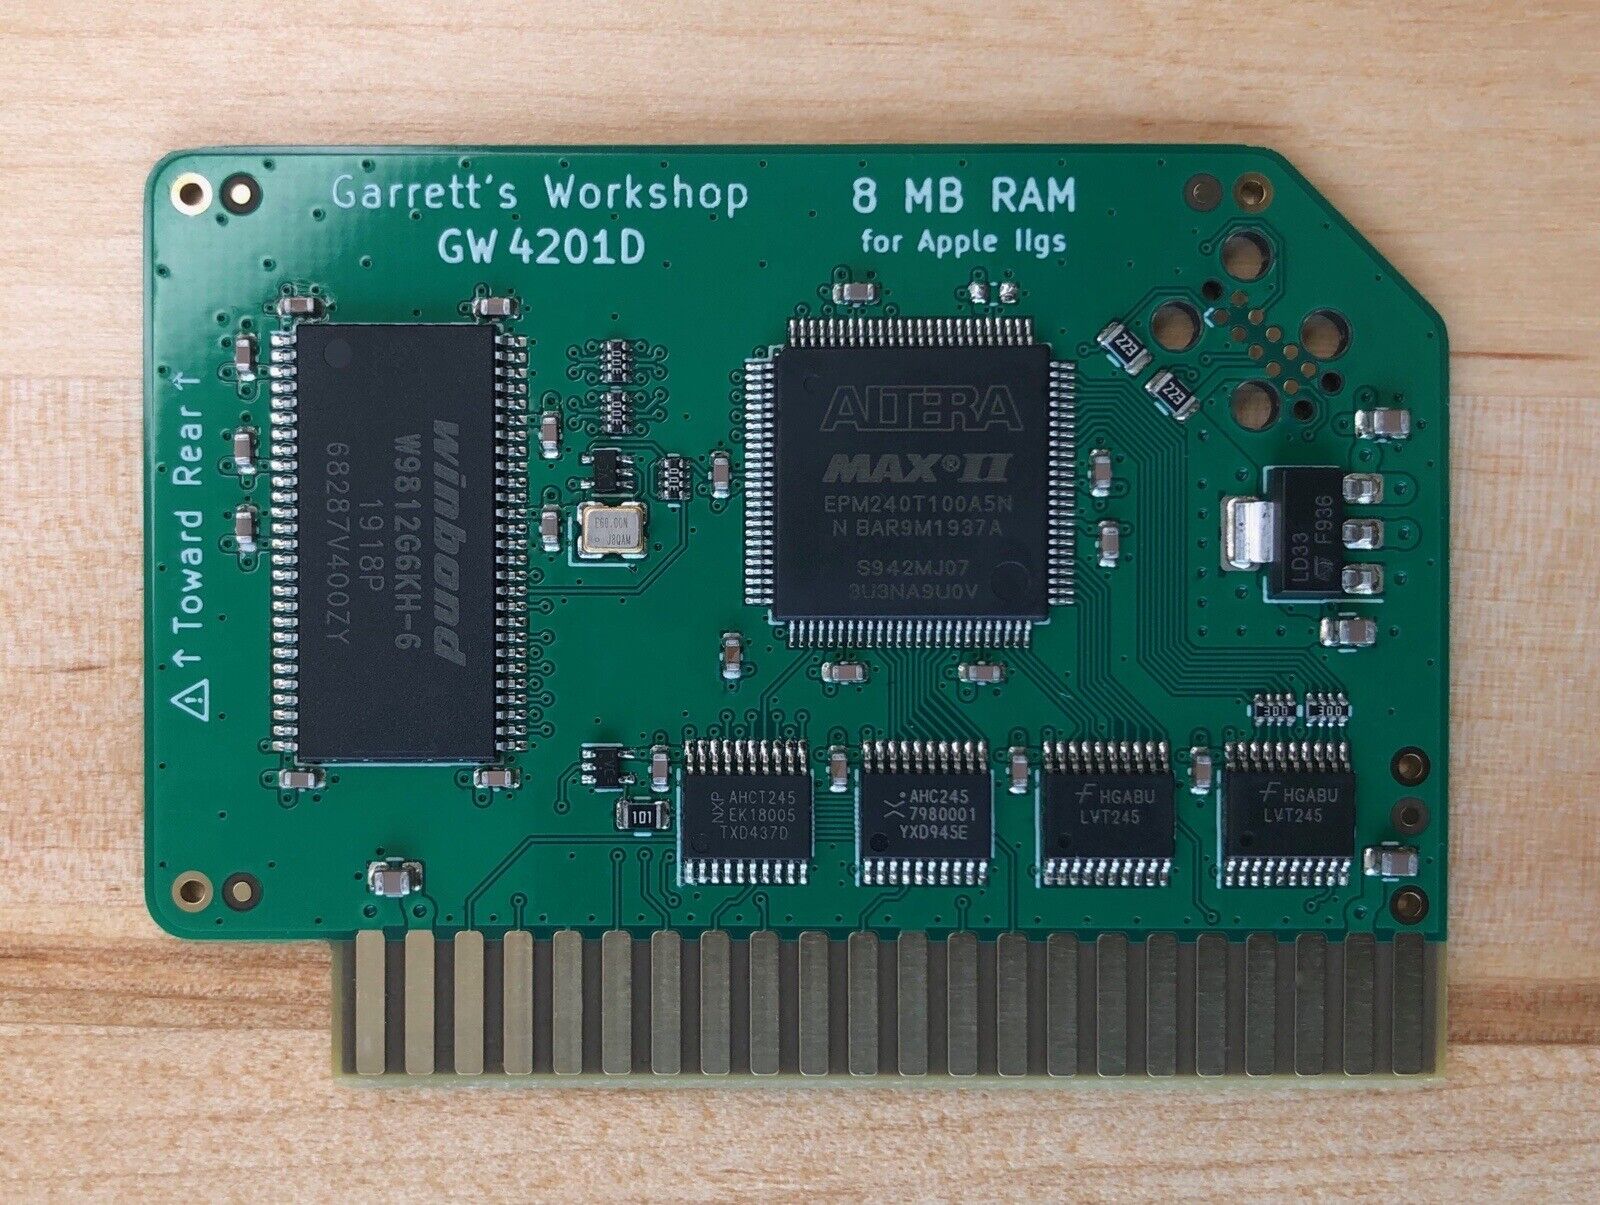 RAM2GS II (GW4201D) -- 8MB RAM for Apple IIgs ][gs -- new 2024 production